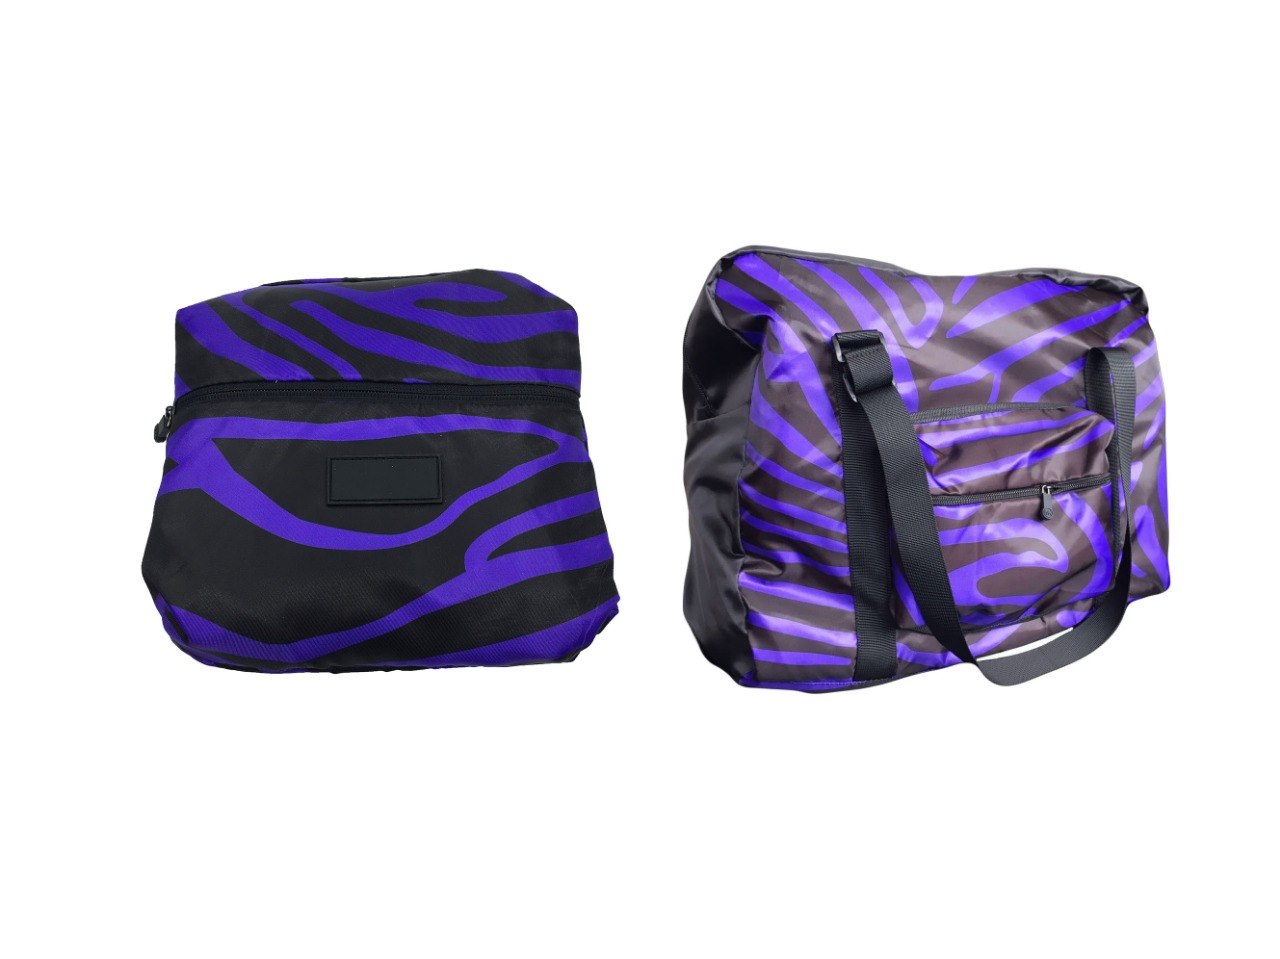  purple,product,product,violet,bag